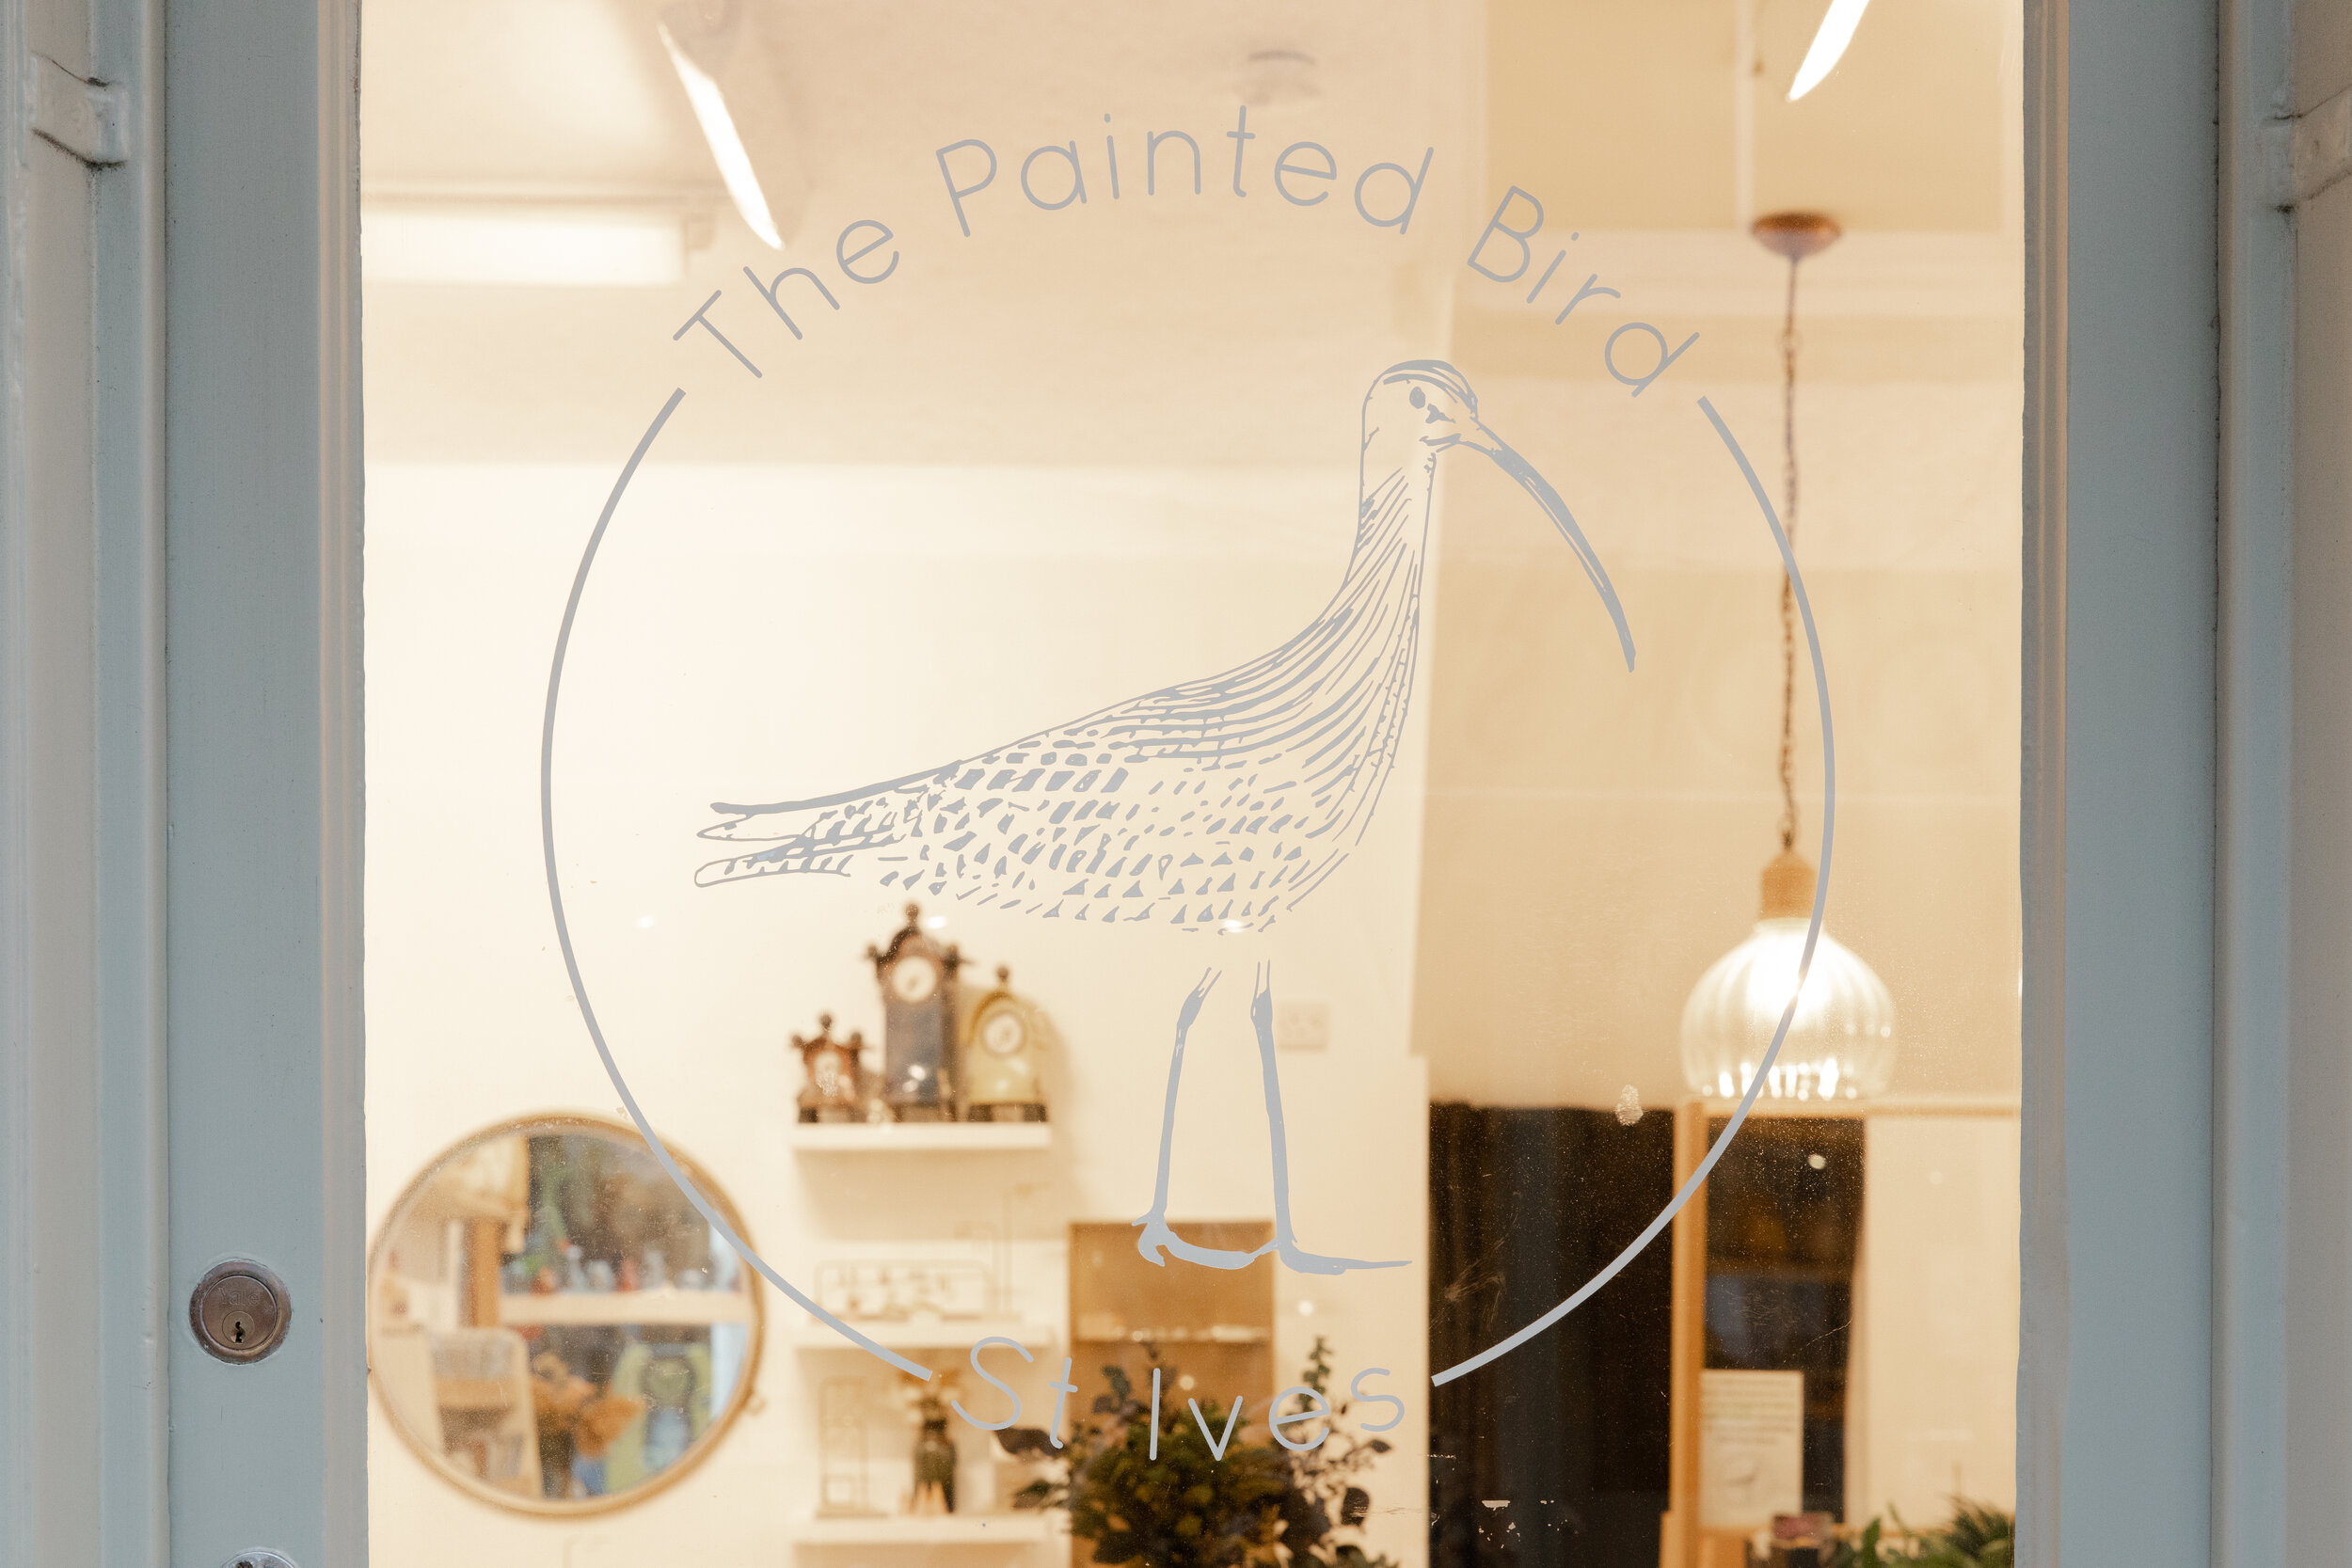 91 Magazine's Shopkeeper Spotlight - The Painted Bird